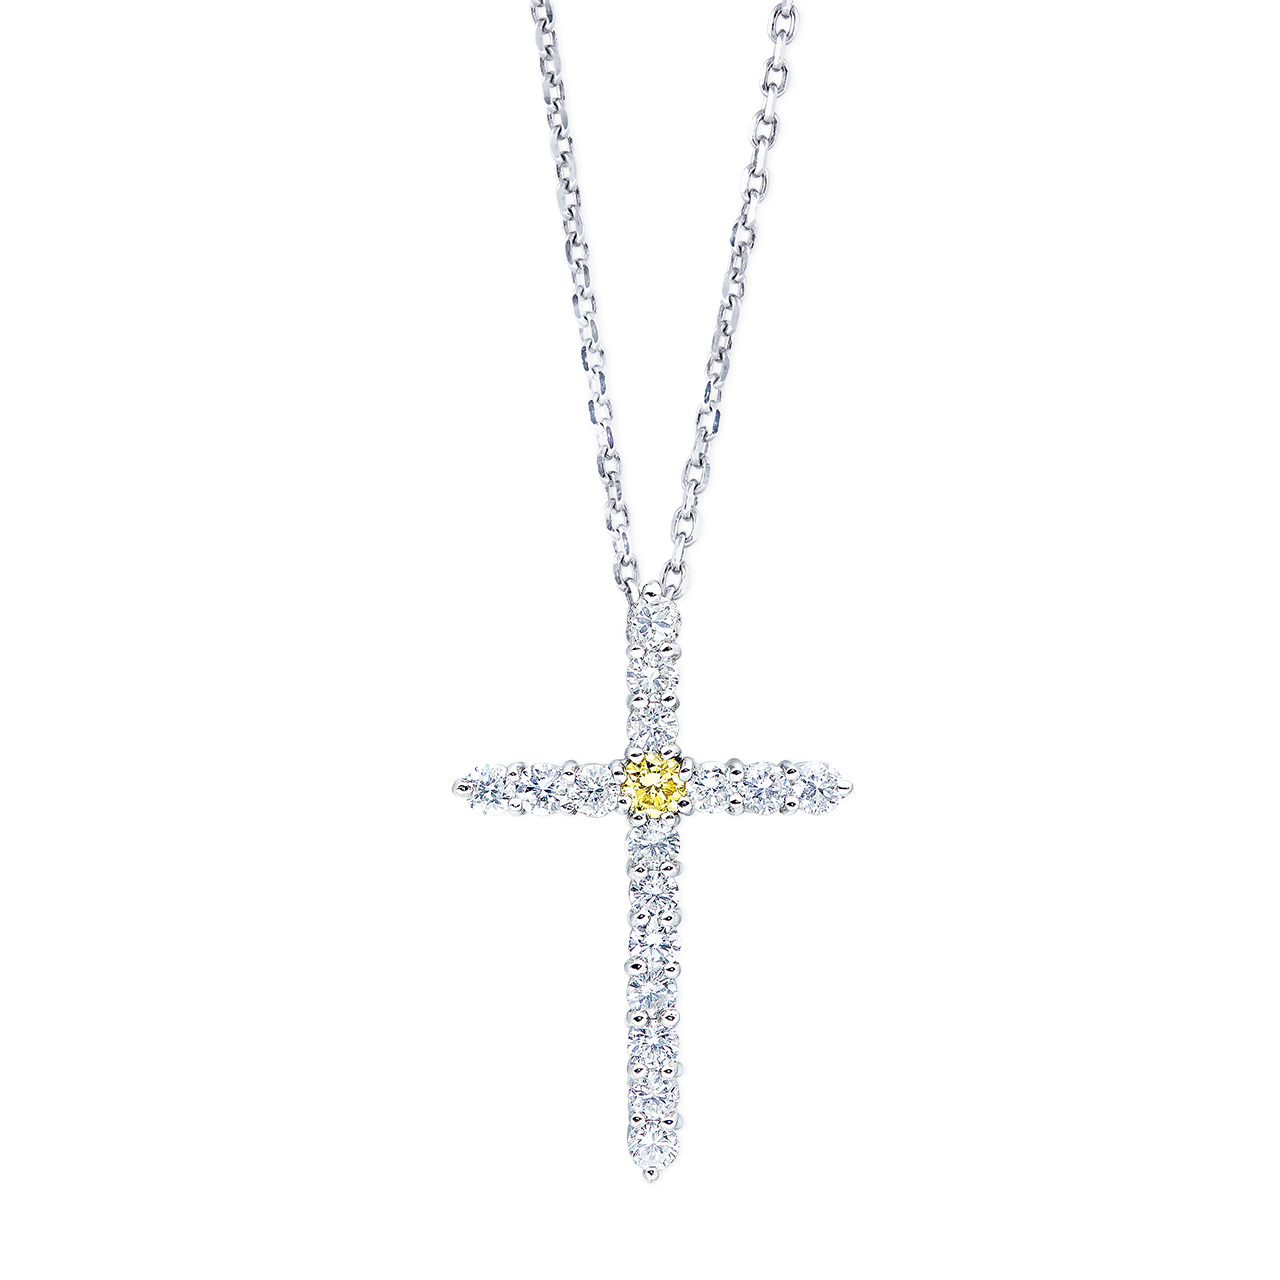 0.05克拉 十字架彩鑽墜鍊
Colored Diamond and 
The Cross Pendant Necklace